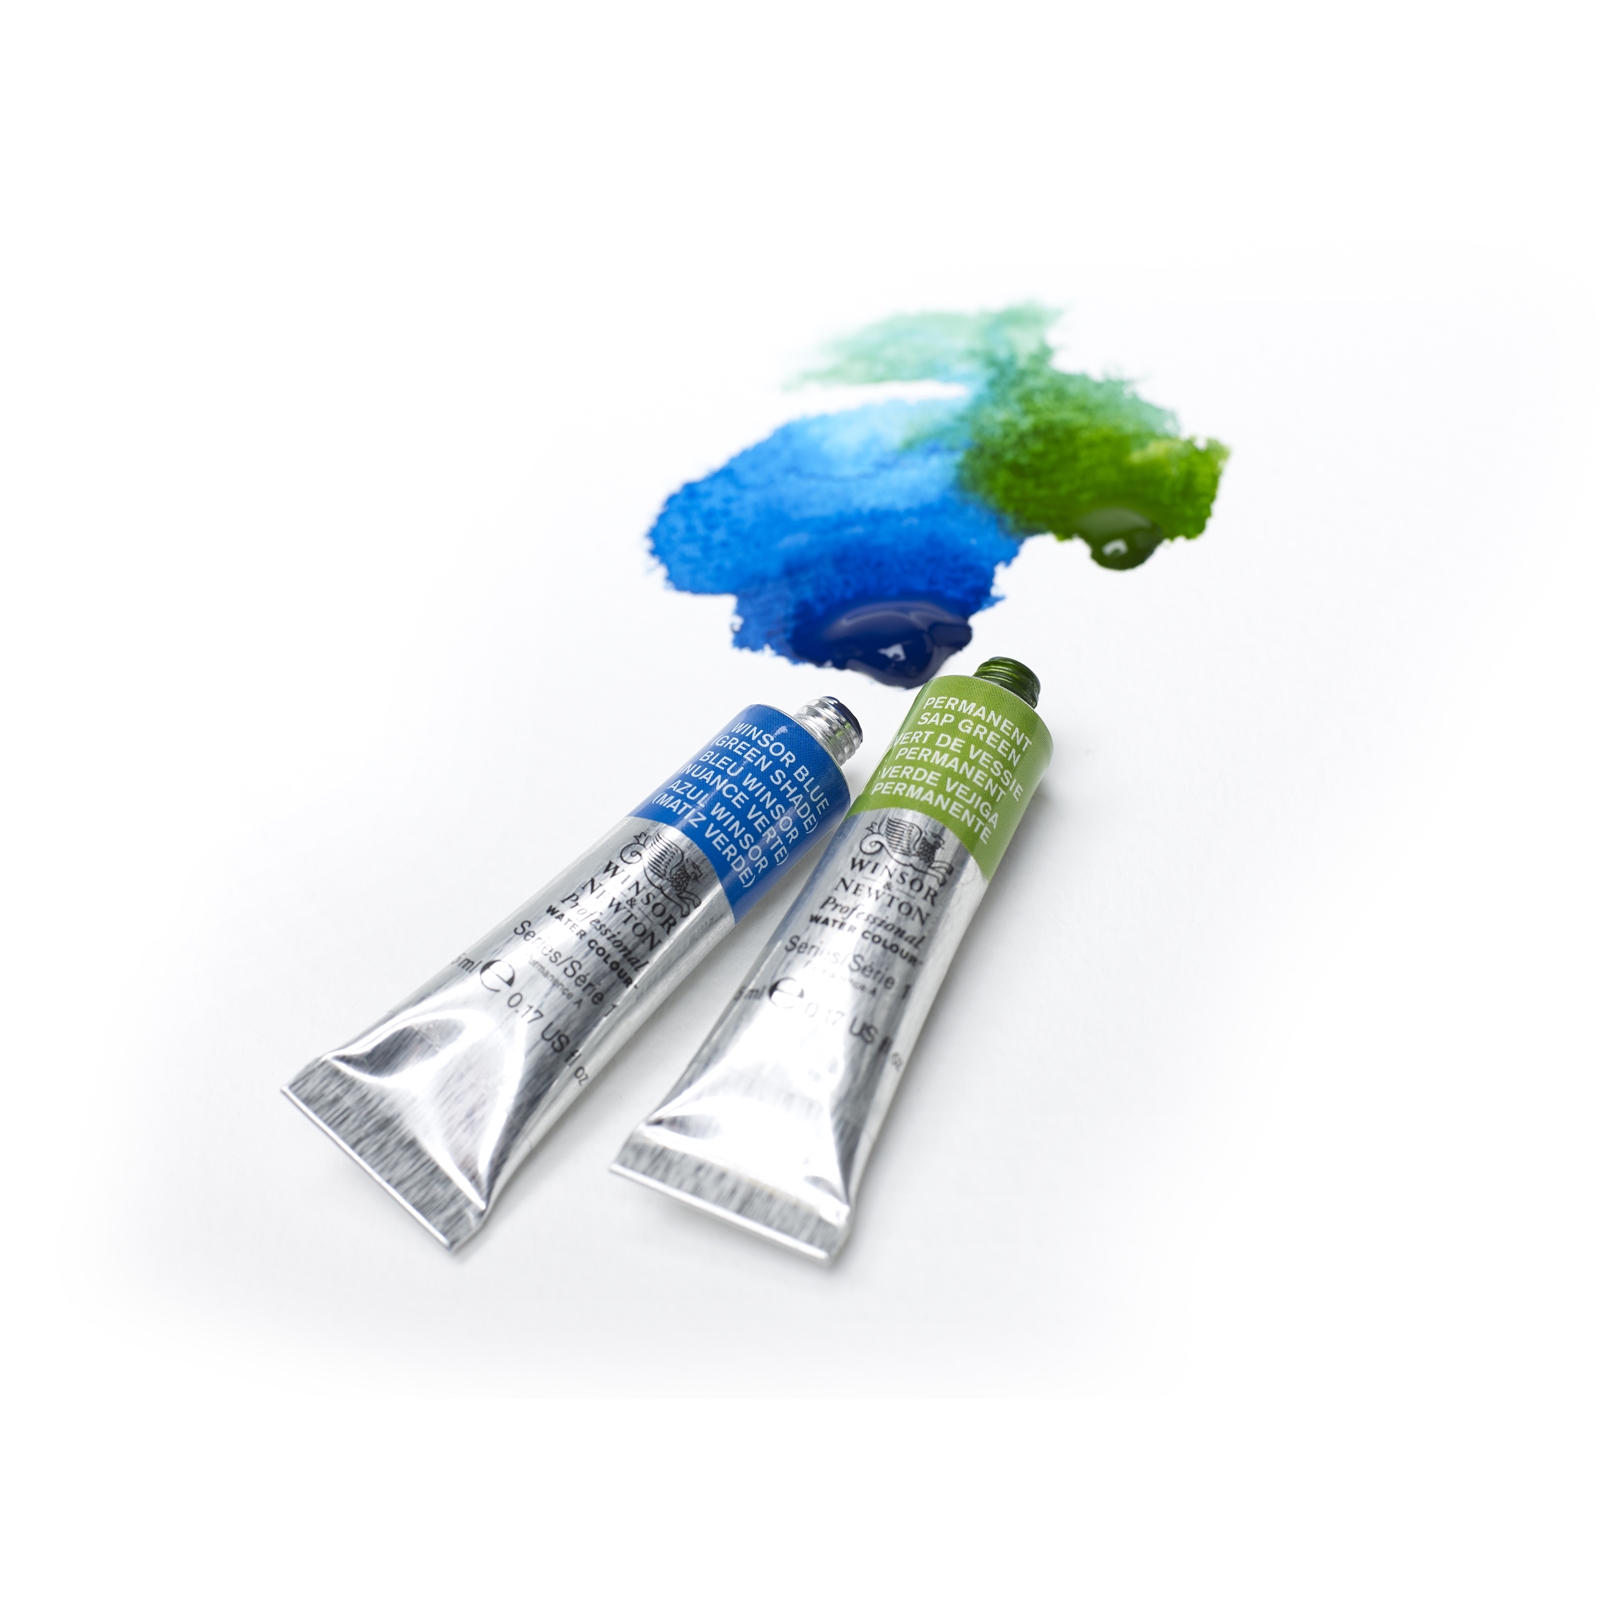 Winsor & Newton Professional Water Colours 5ml Cobalt Turquoise Light